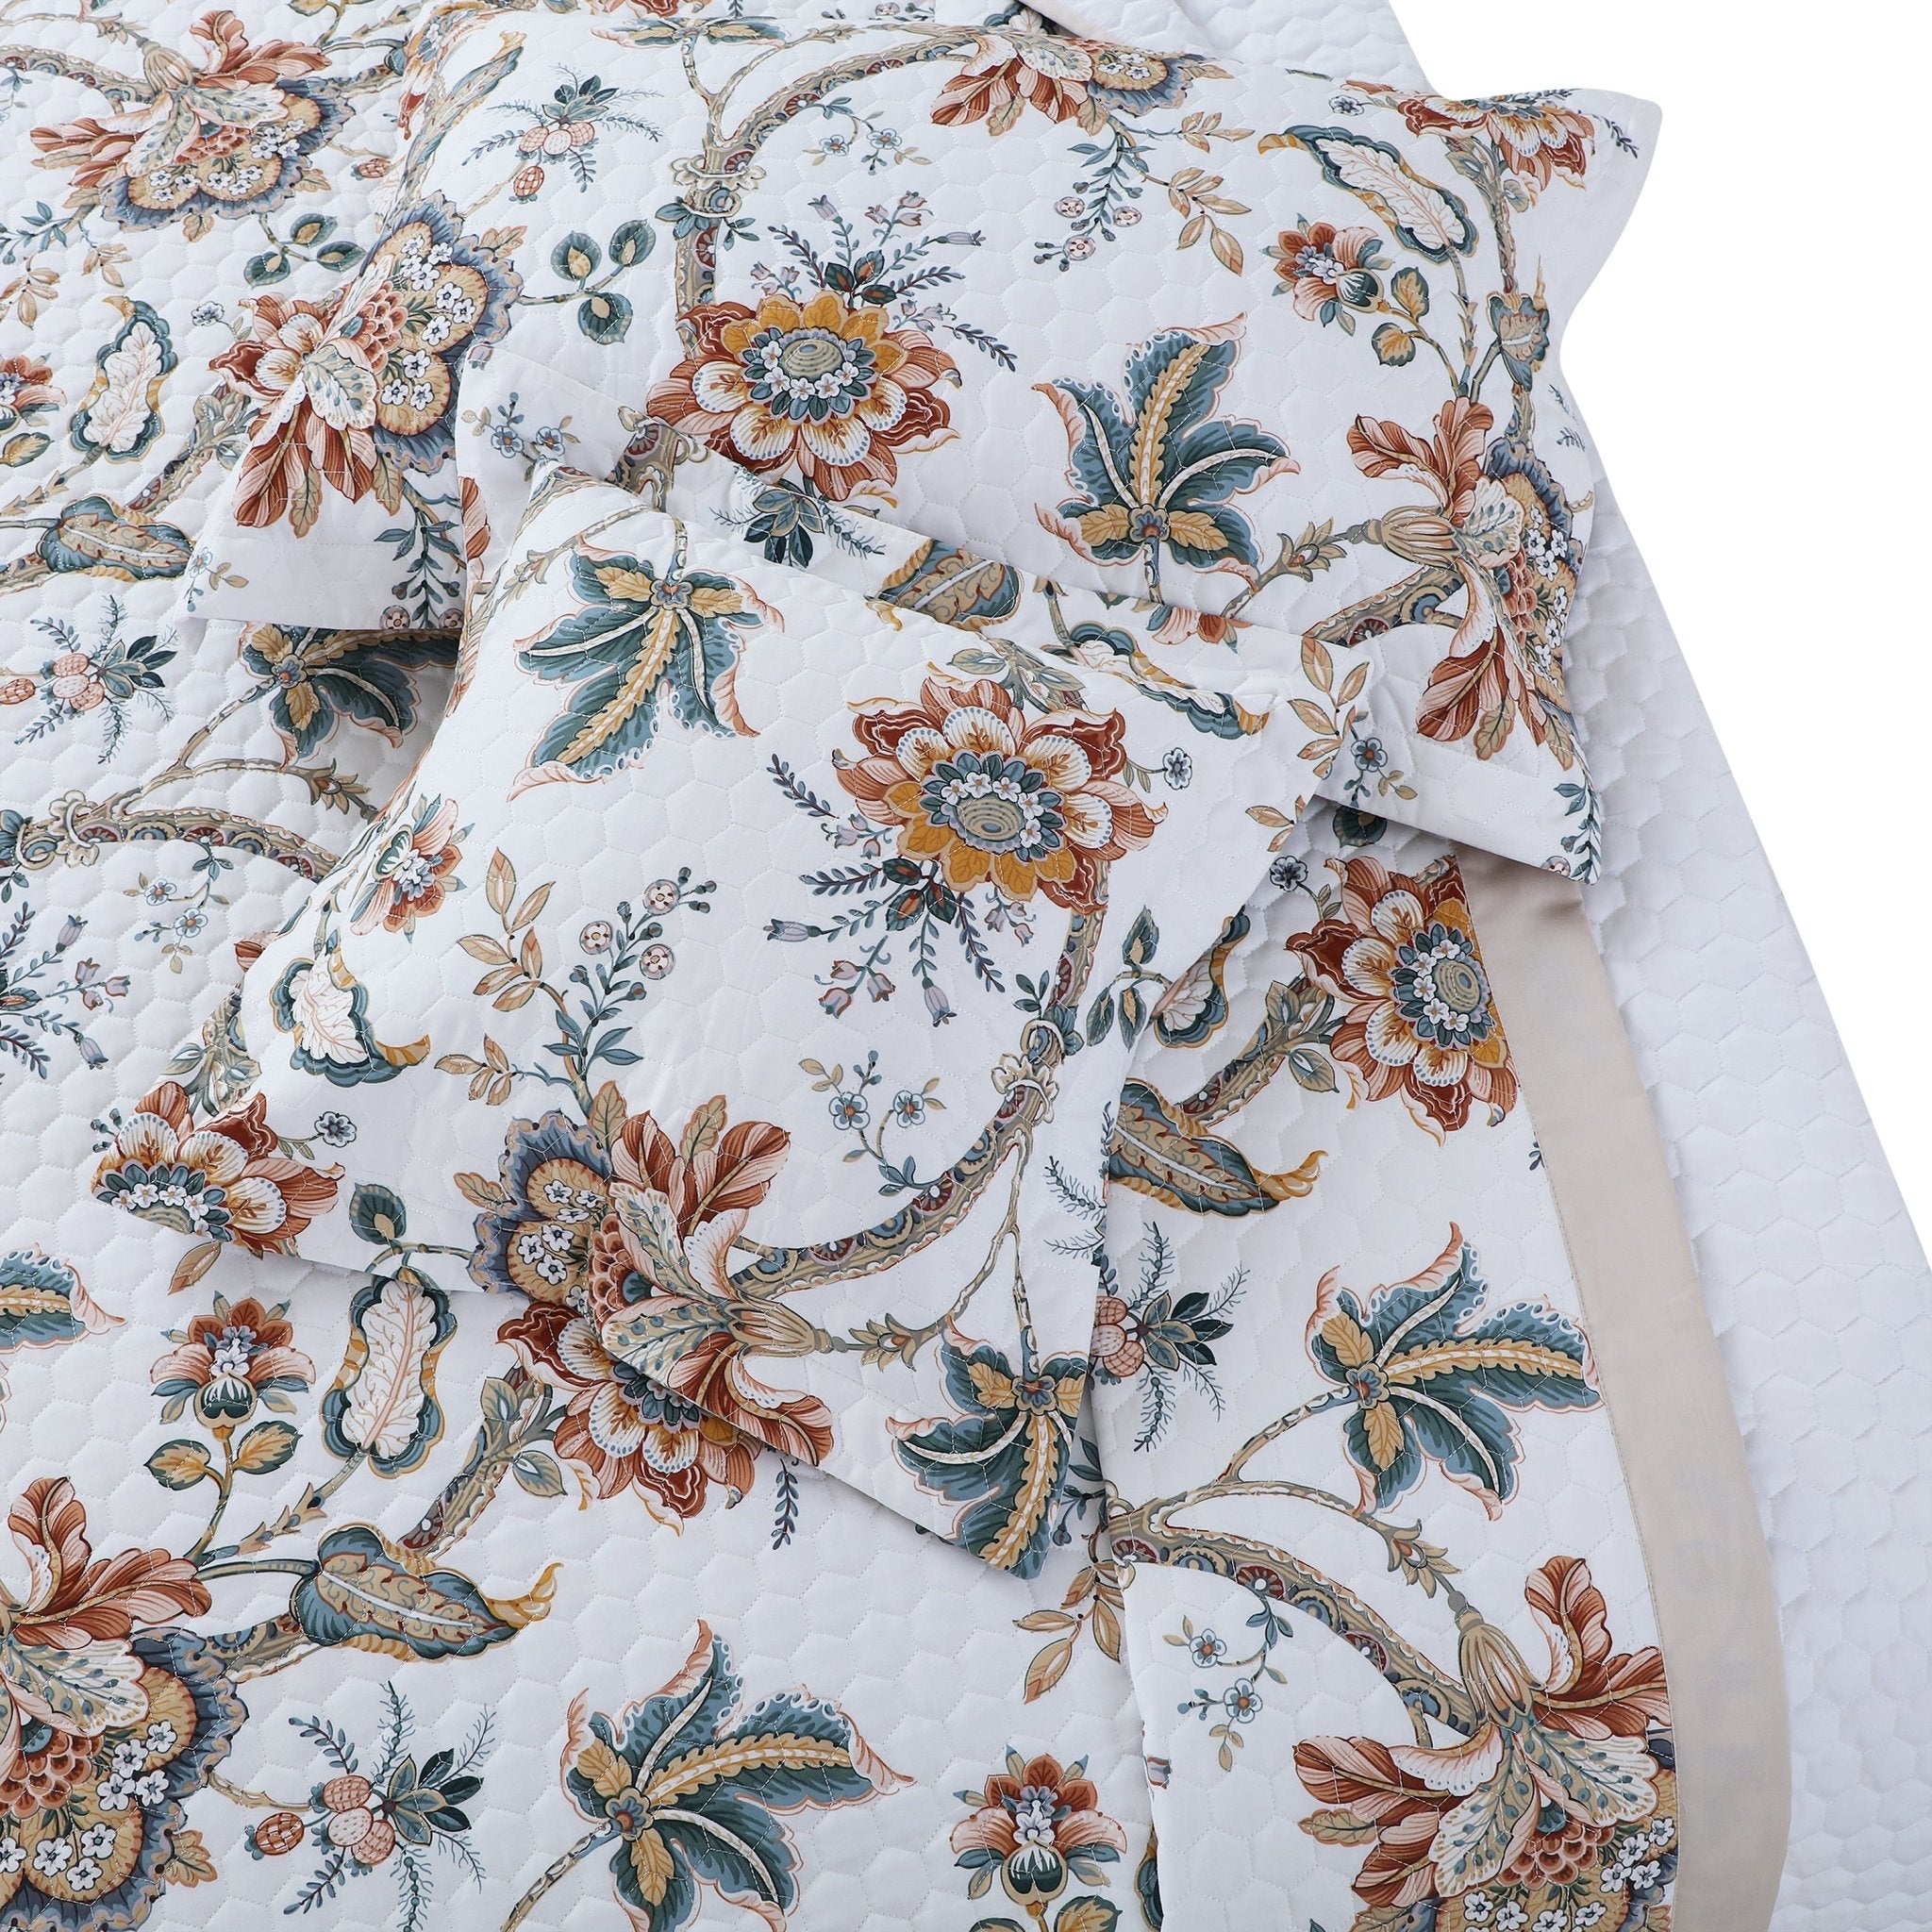 Malako Royale White Botanical 100% Cotton King Size Quilted Bedspread - MALAKO